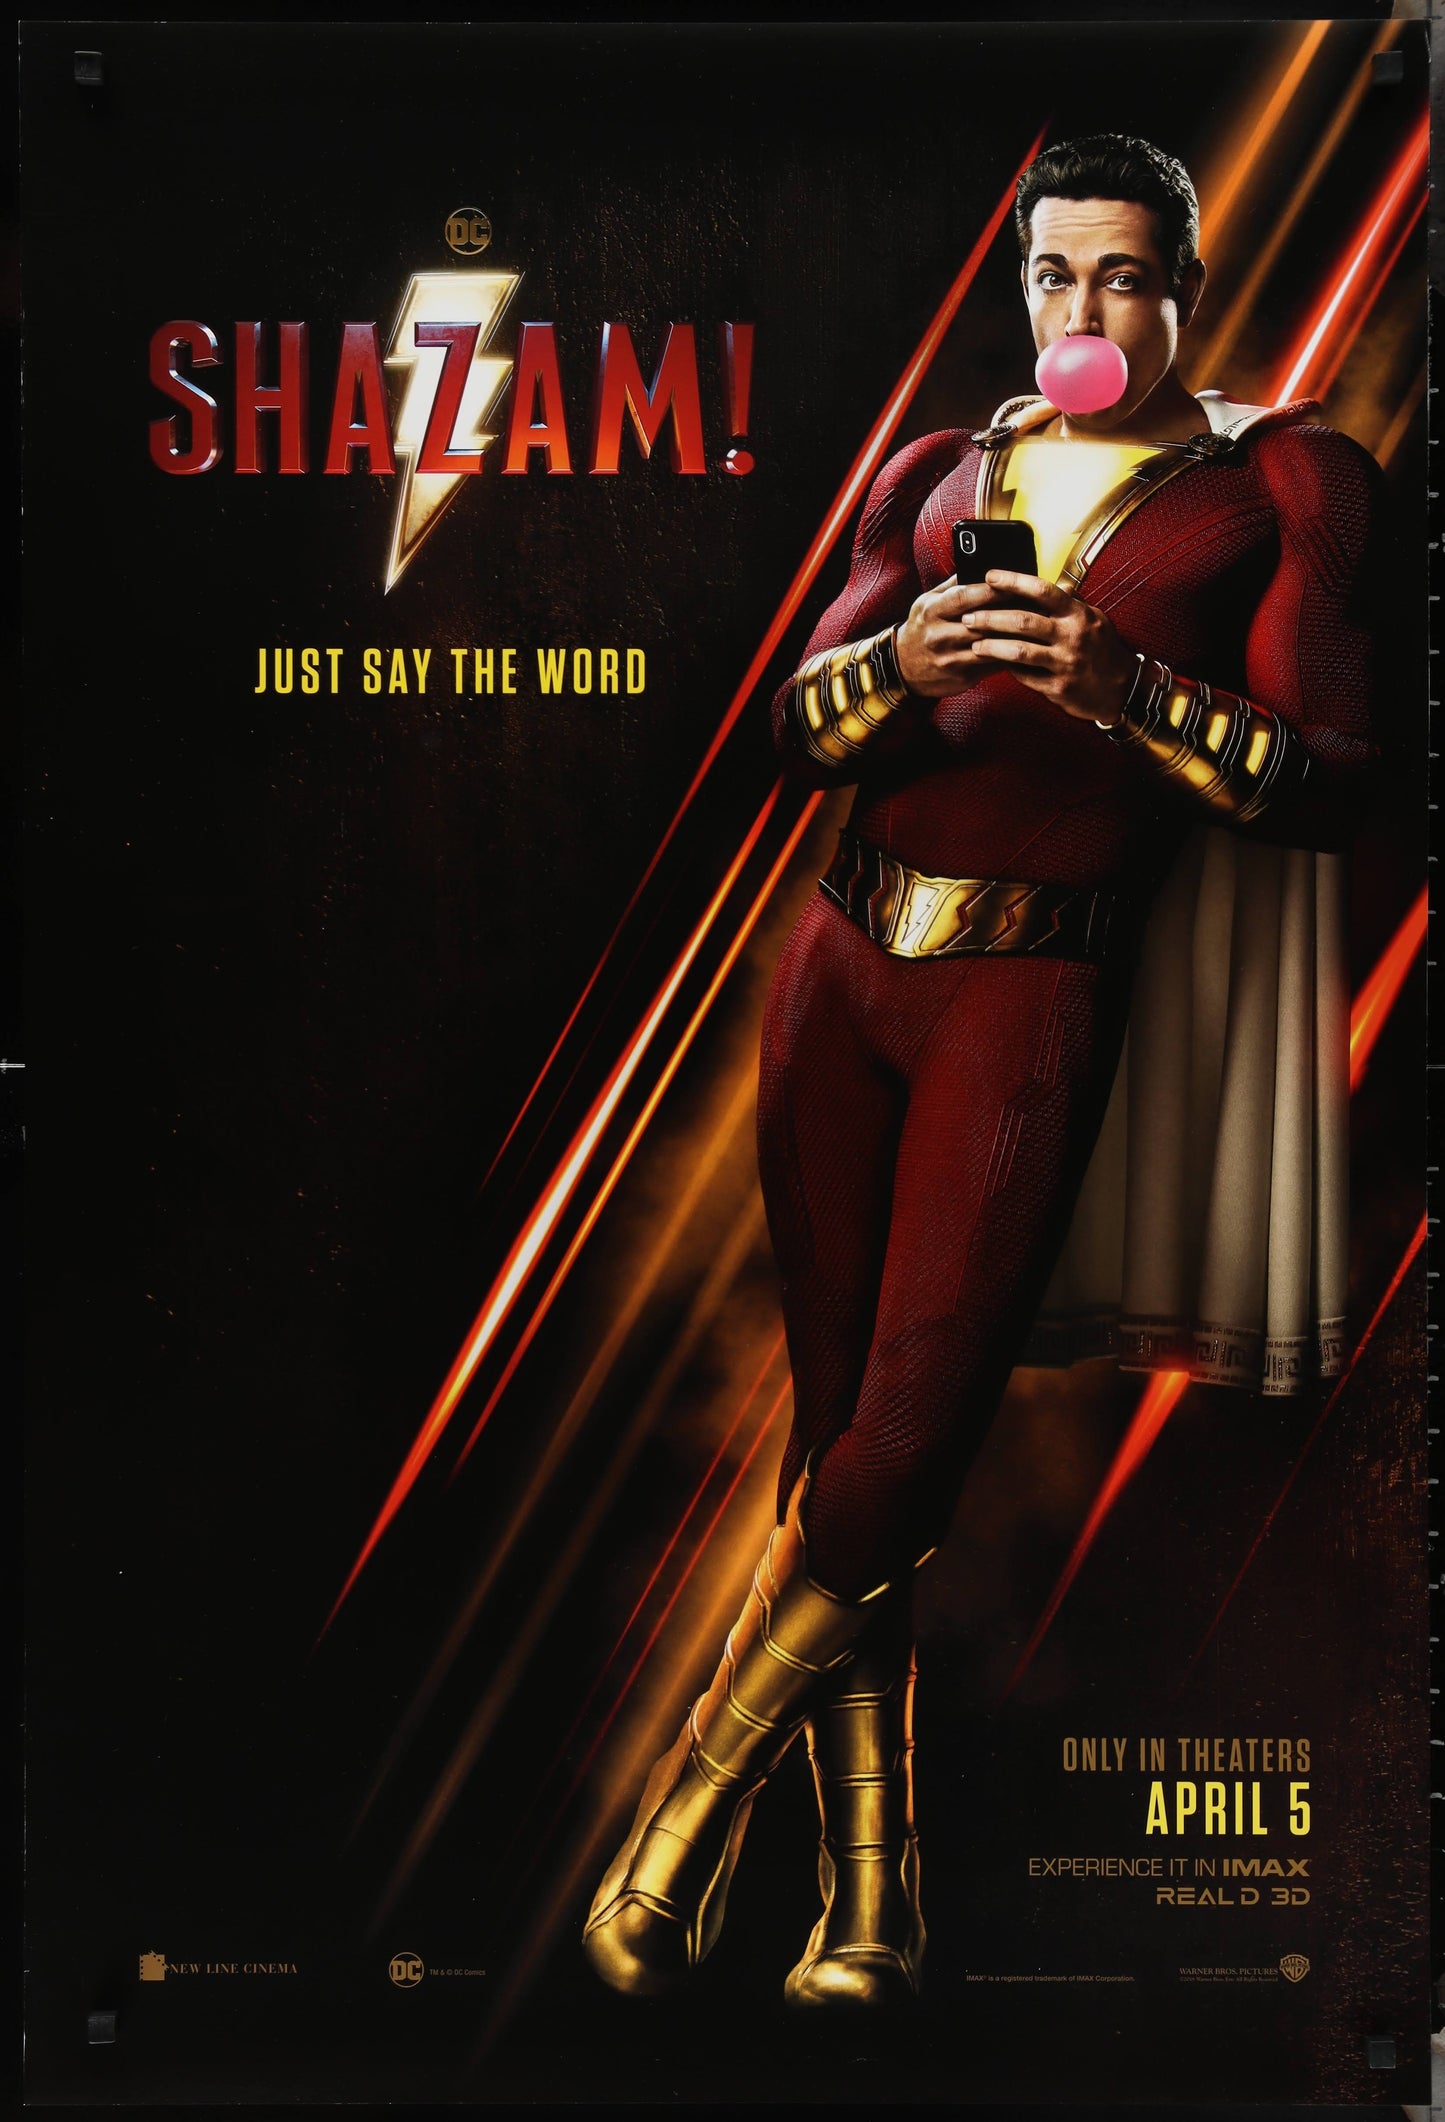 Shazam US One Sheet Teaser Style (2017) - ORIGINAL RELEASE - posterpalace.com